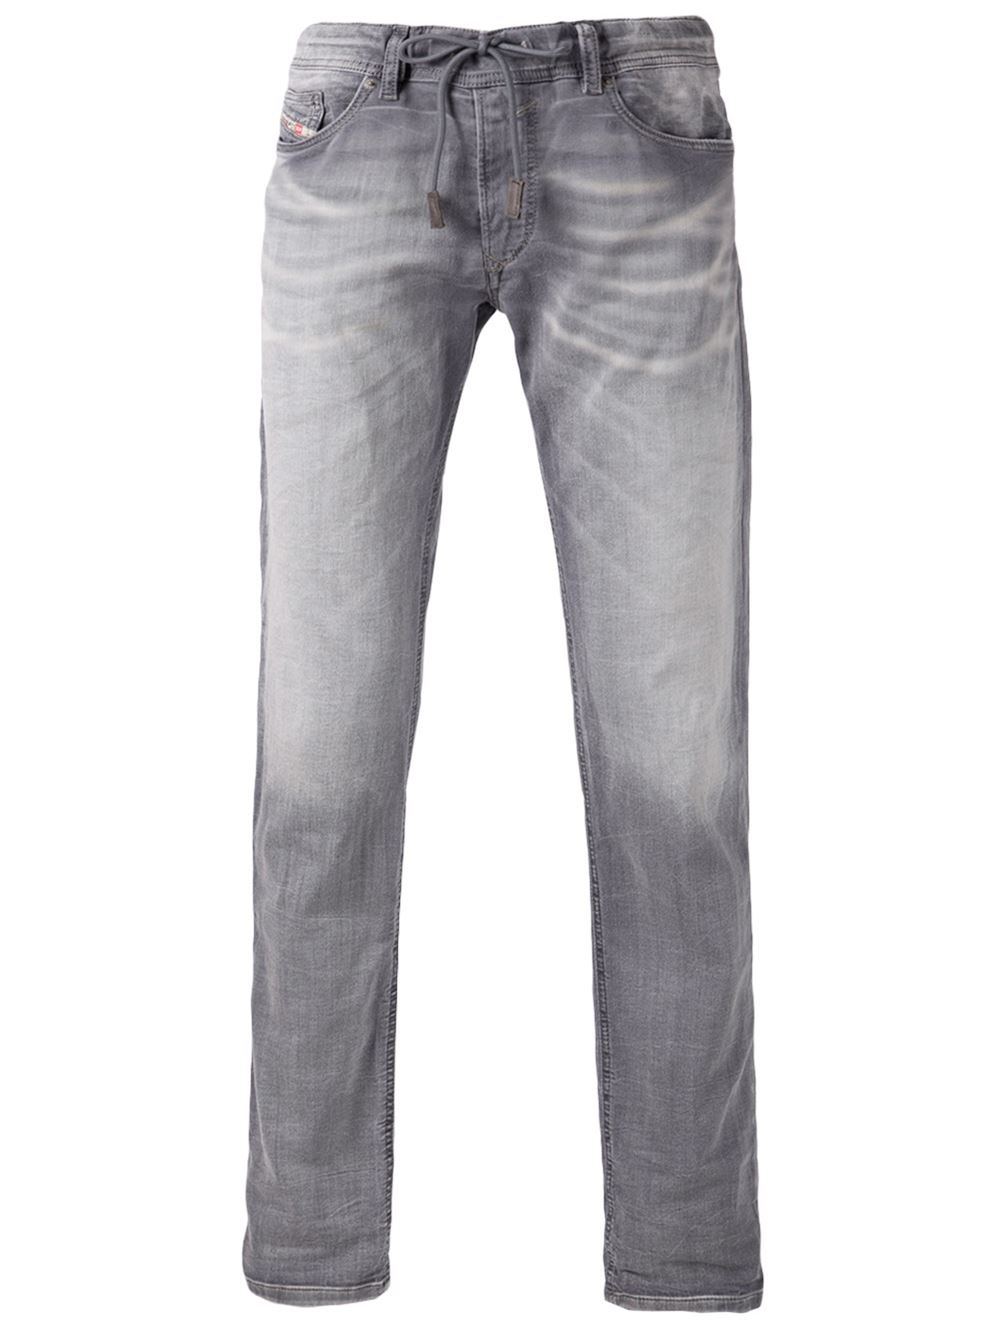 DIESEL 'Waykee Jogg' Jeans in Grey (Gray) for Men - Lyst